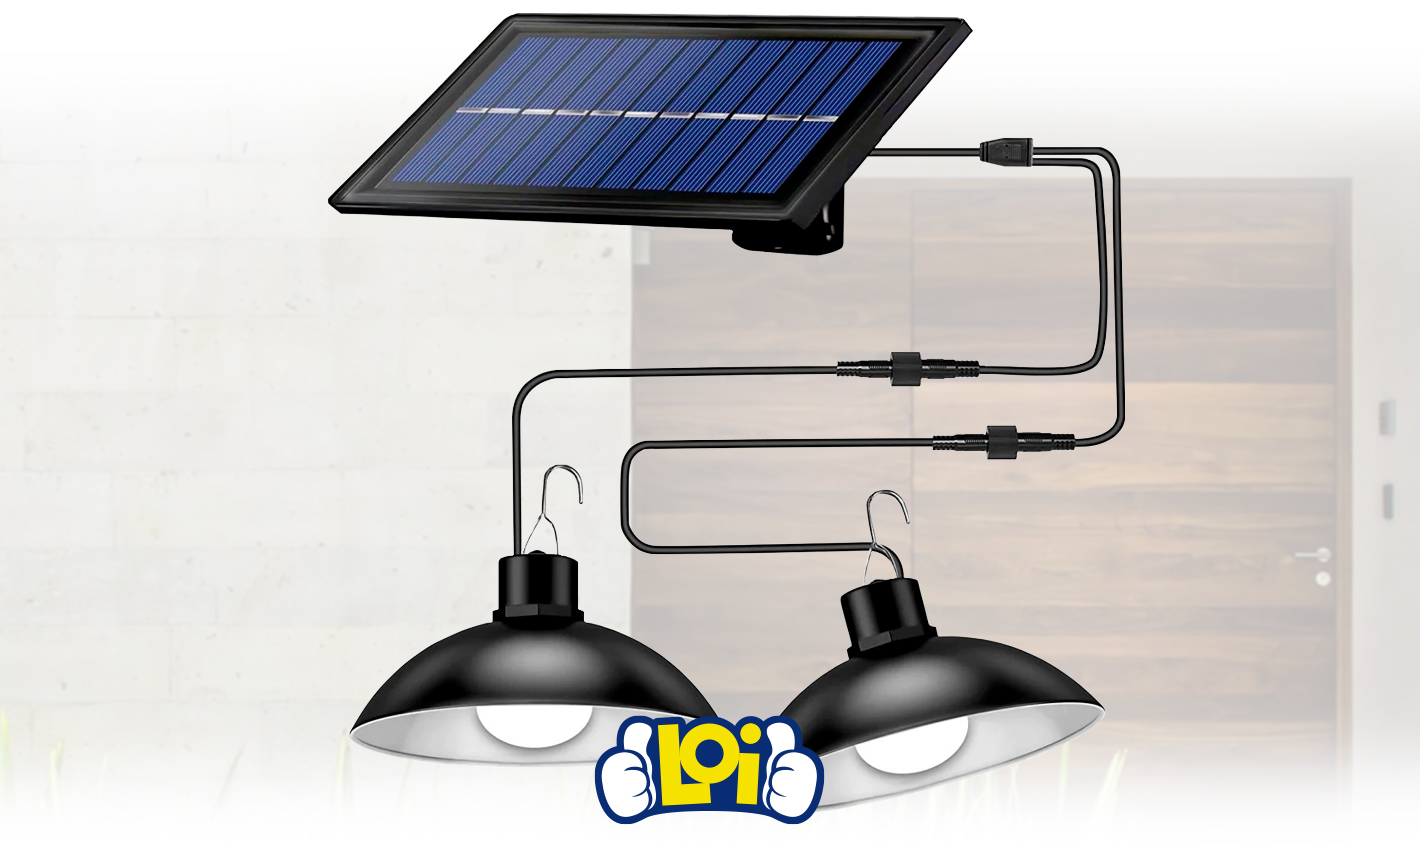 Kit de Iluminación Exterior 2 Focos LED 30W con 3 Niveles de Brillo + Panel  Solar + Control Remoto, oferta LOi.